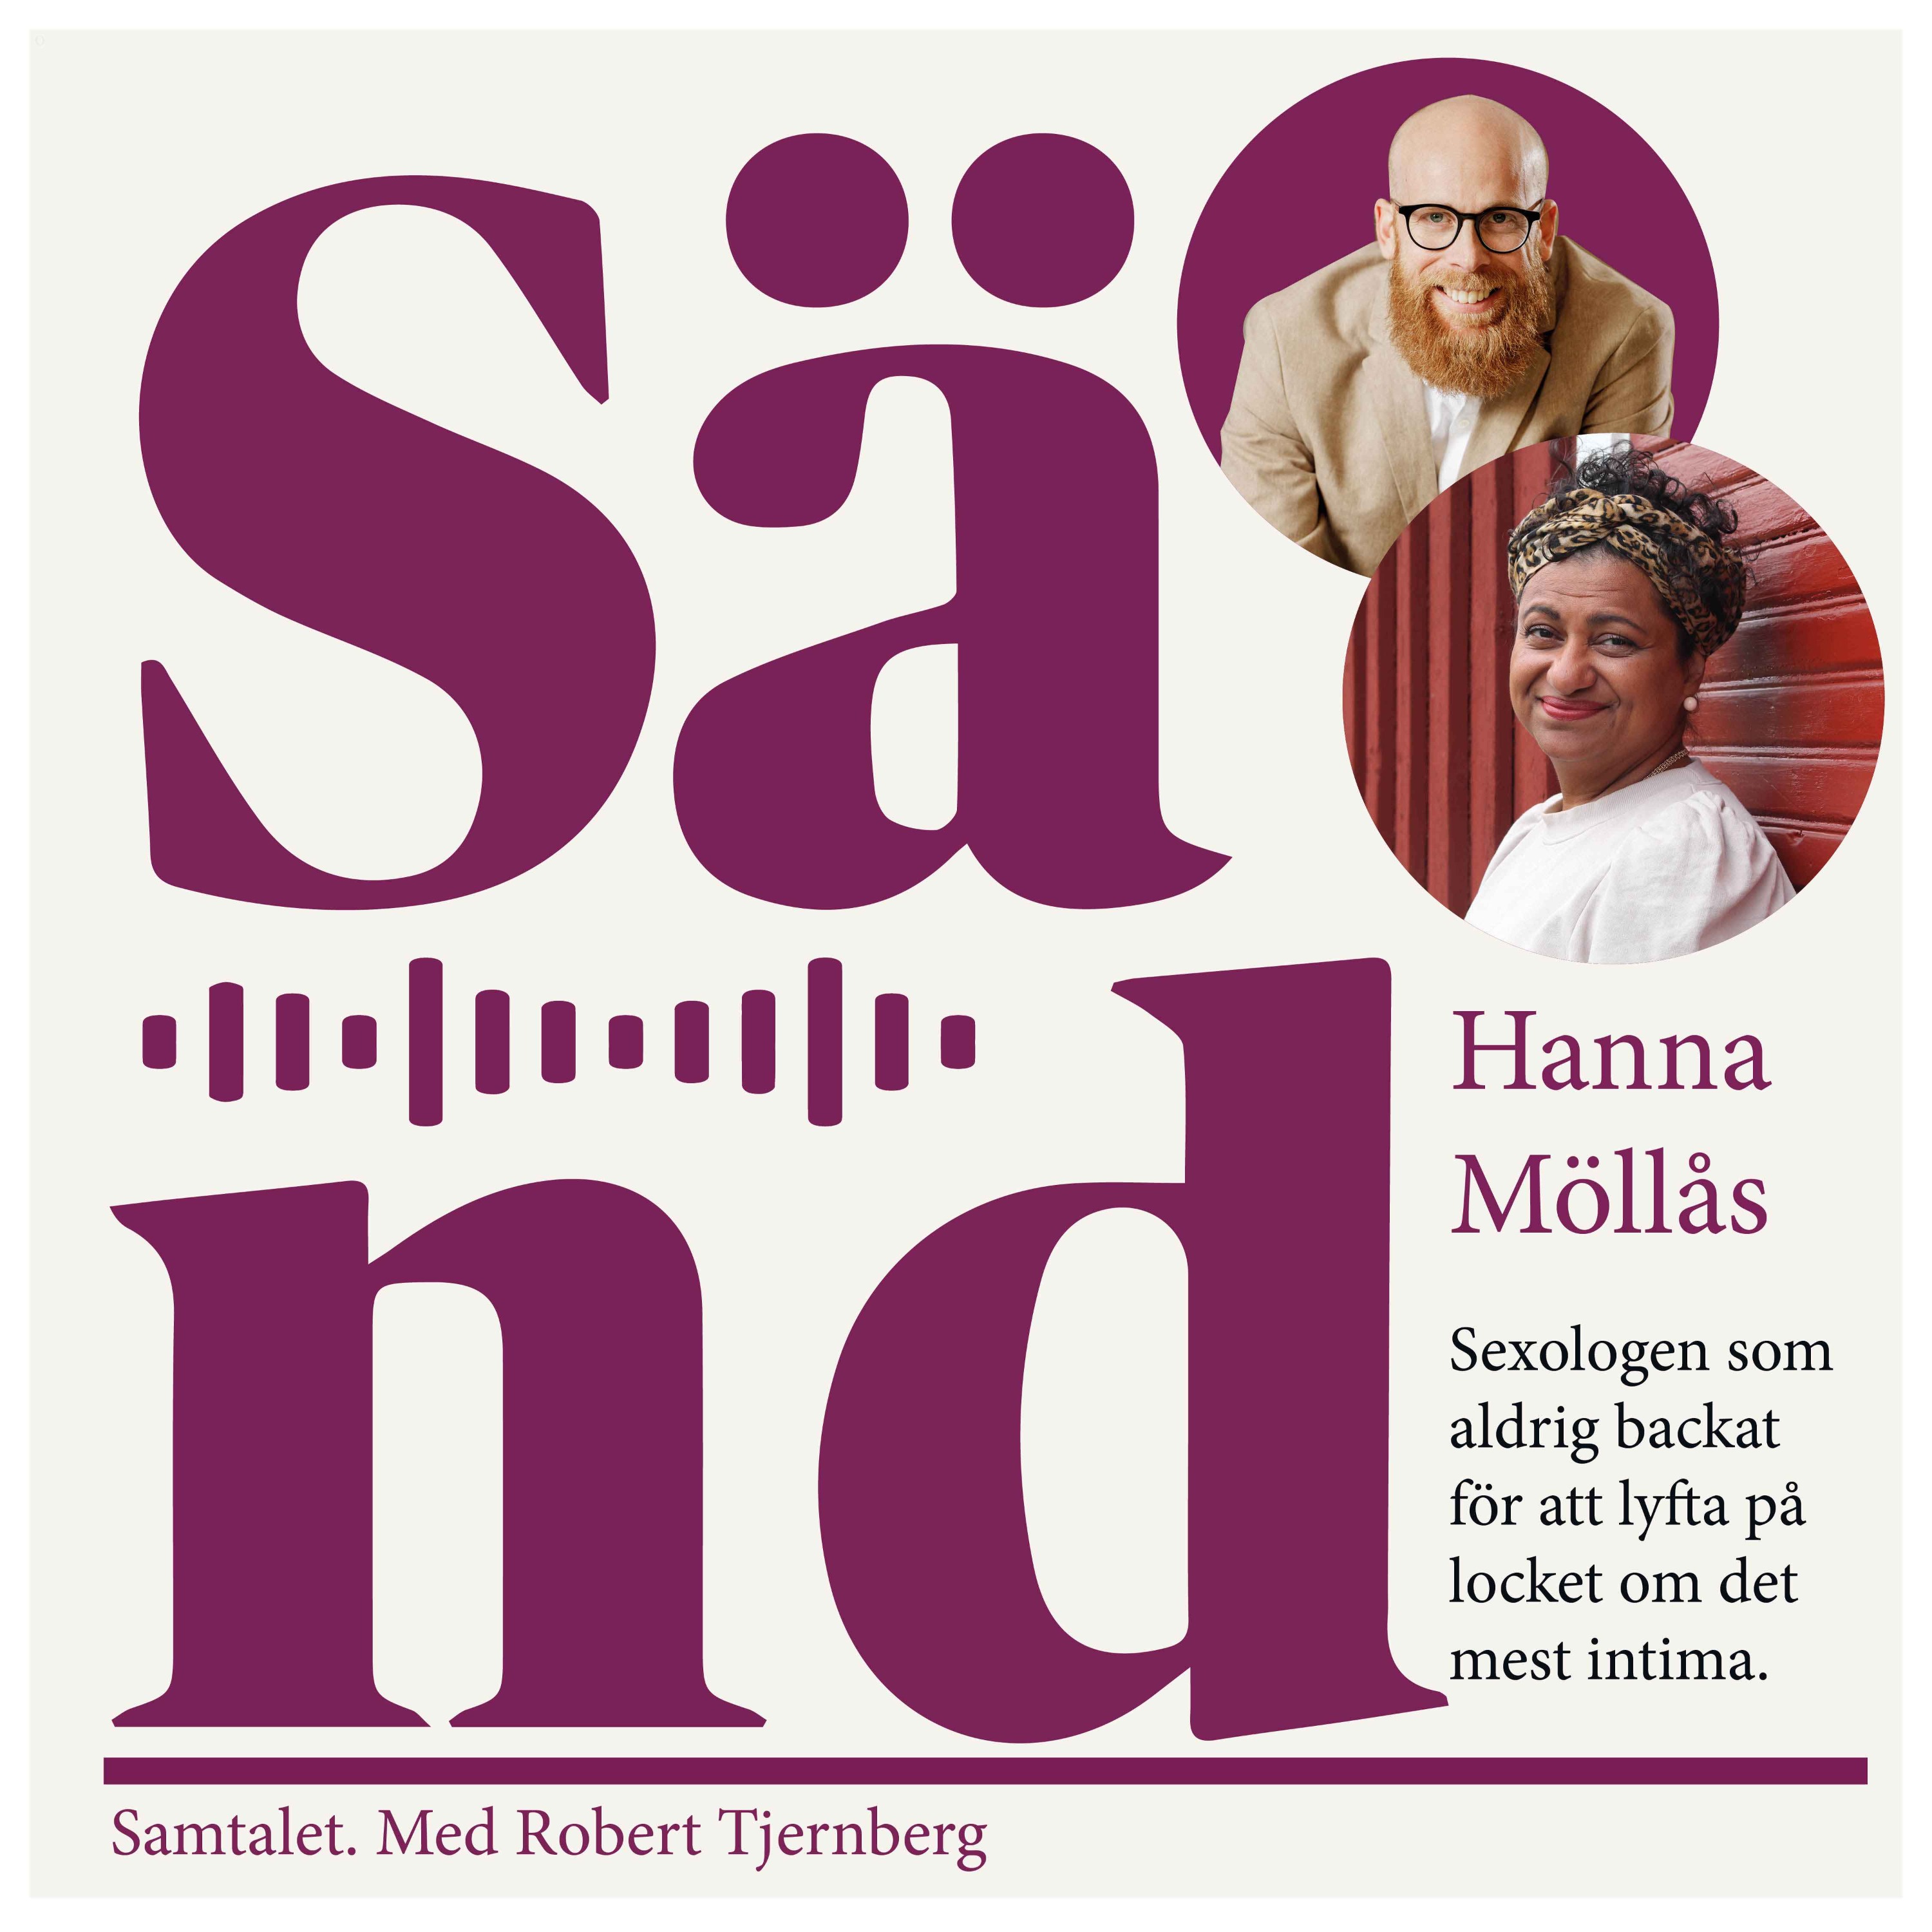 Ep 15: Hanna Möllås - Sexologens guide till Galaxen